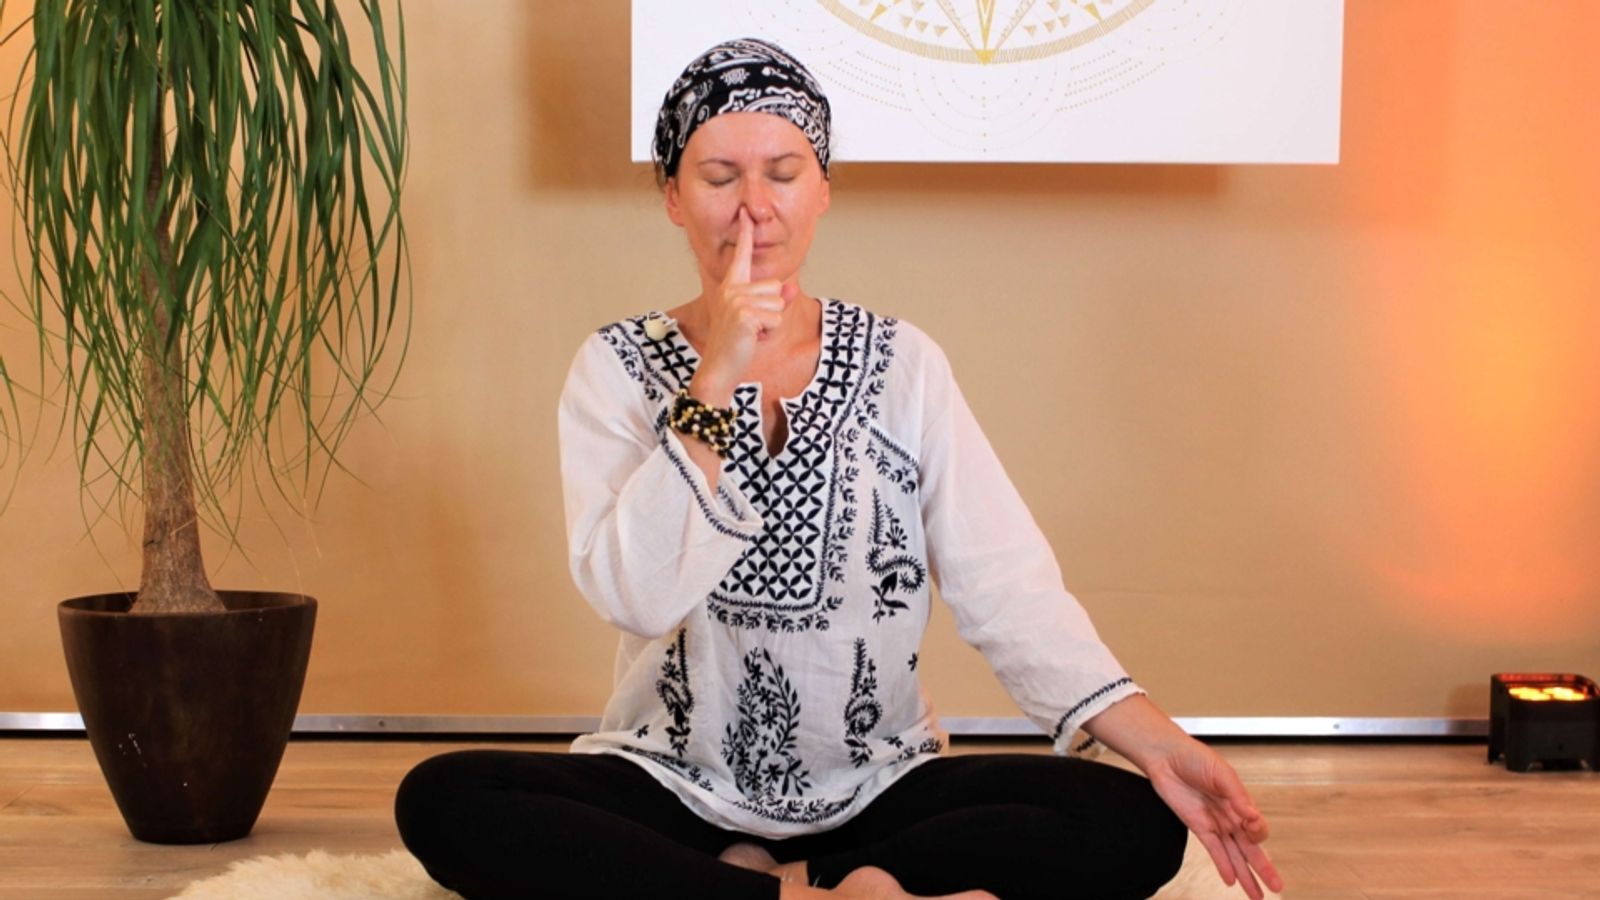 Kriya to open the heart center - release emotional defenses